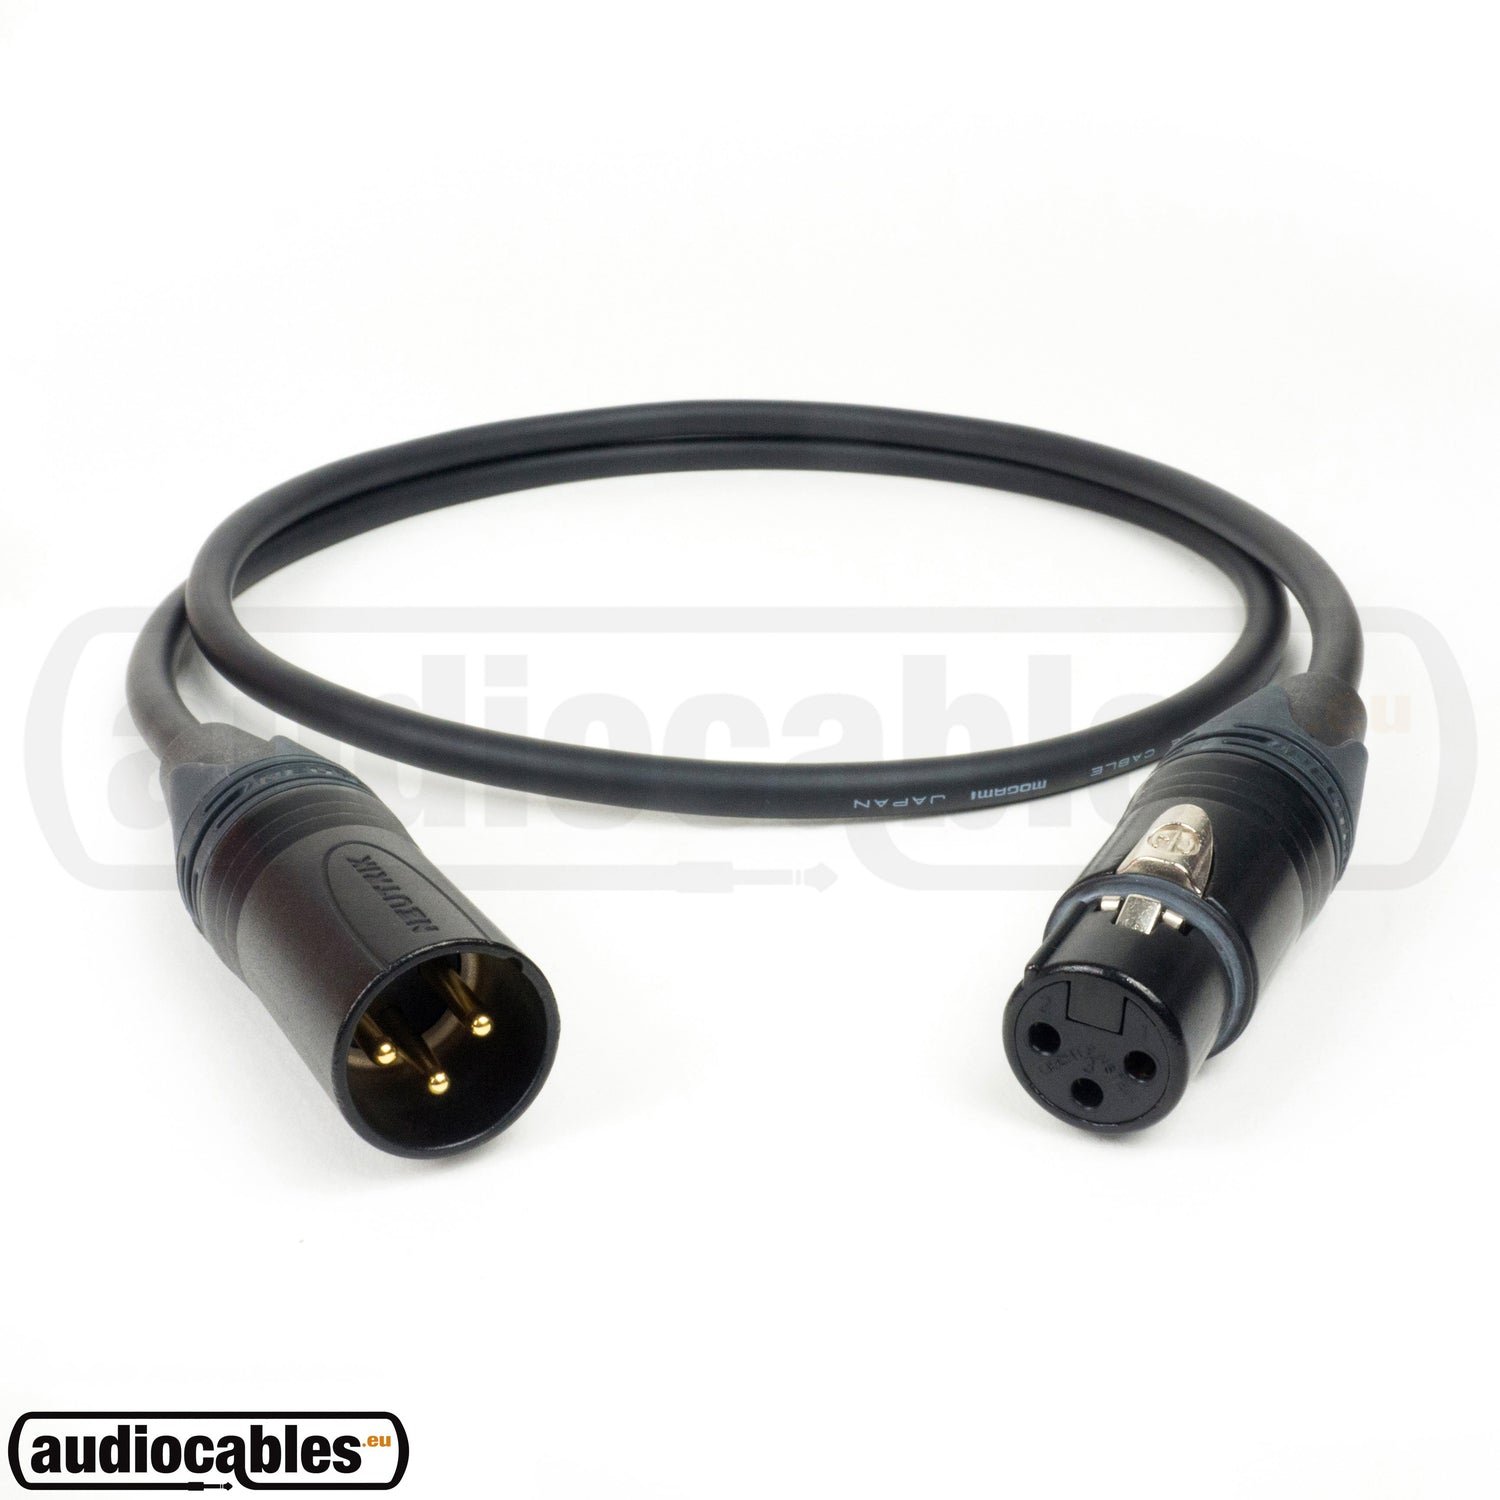 001. XLR Cables